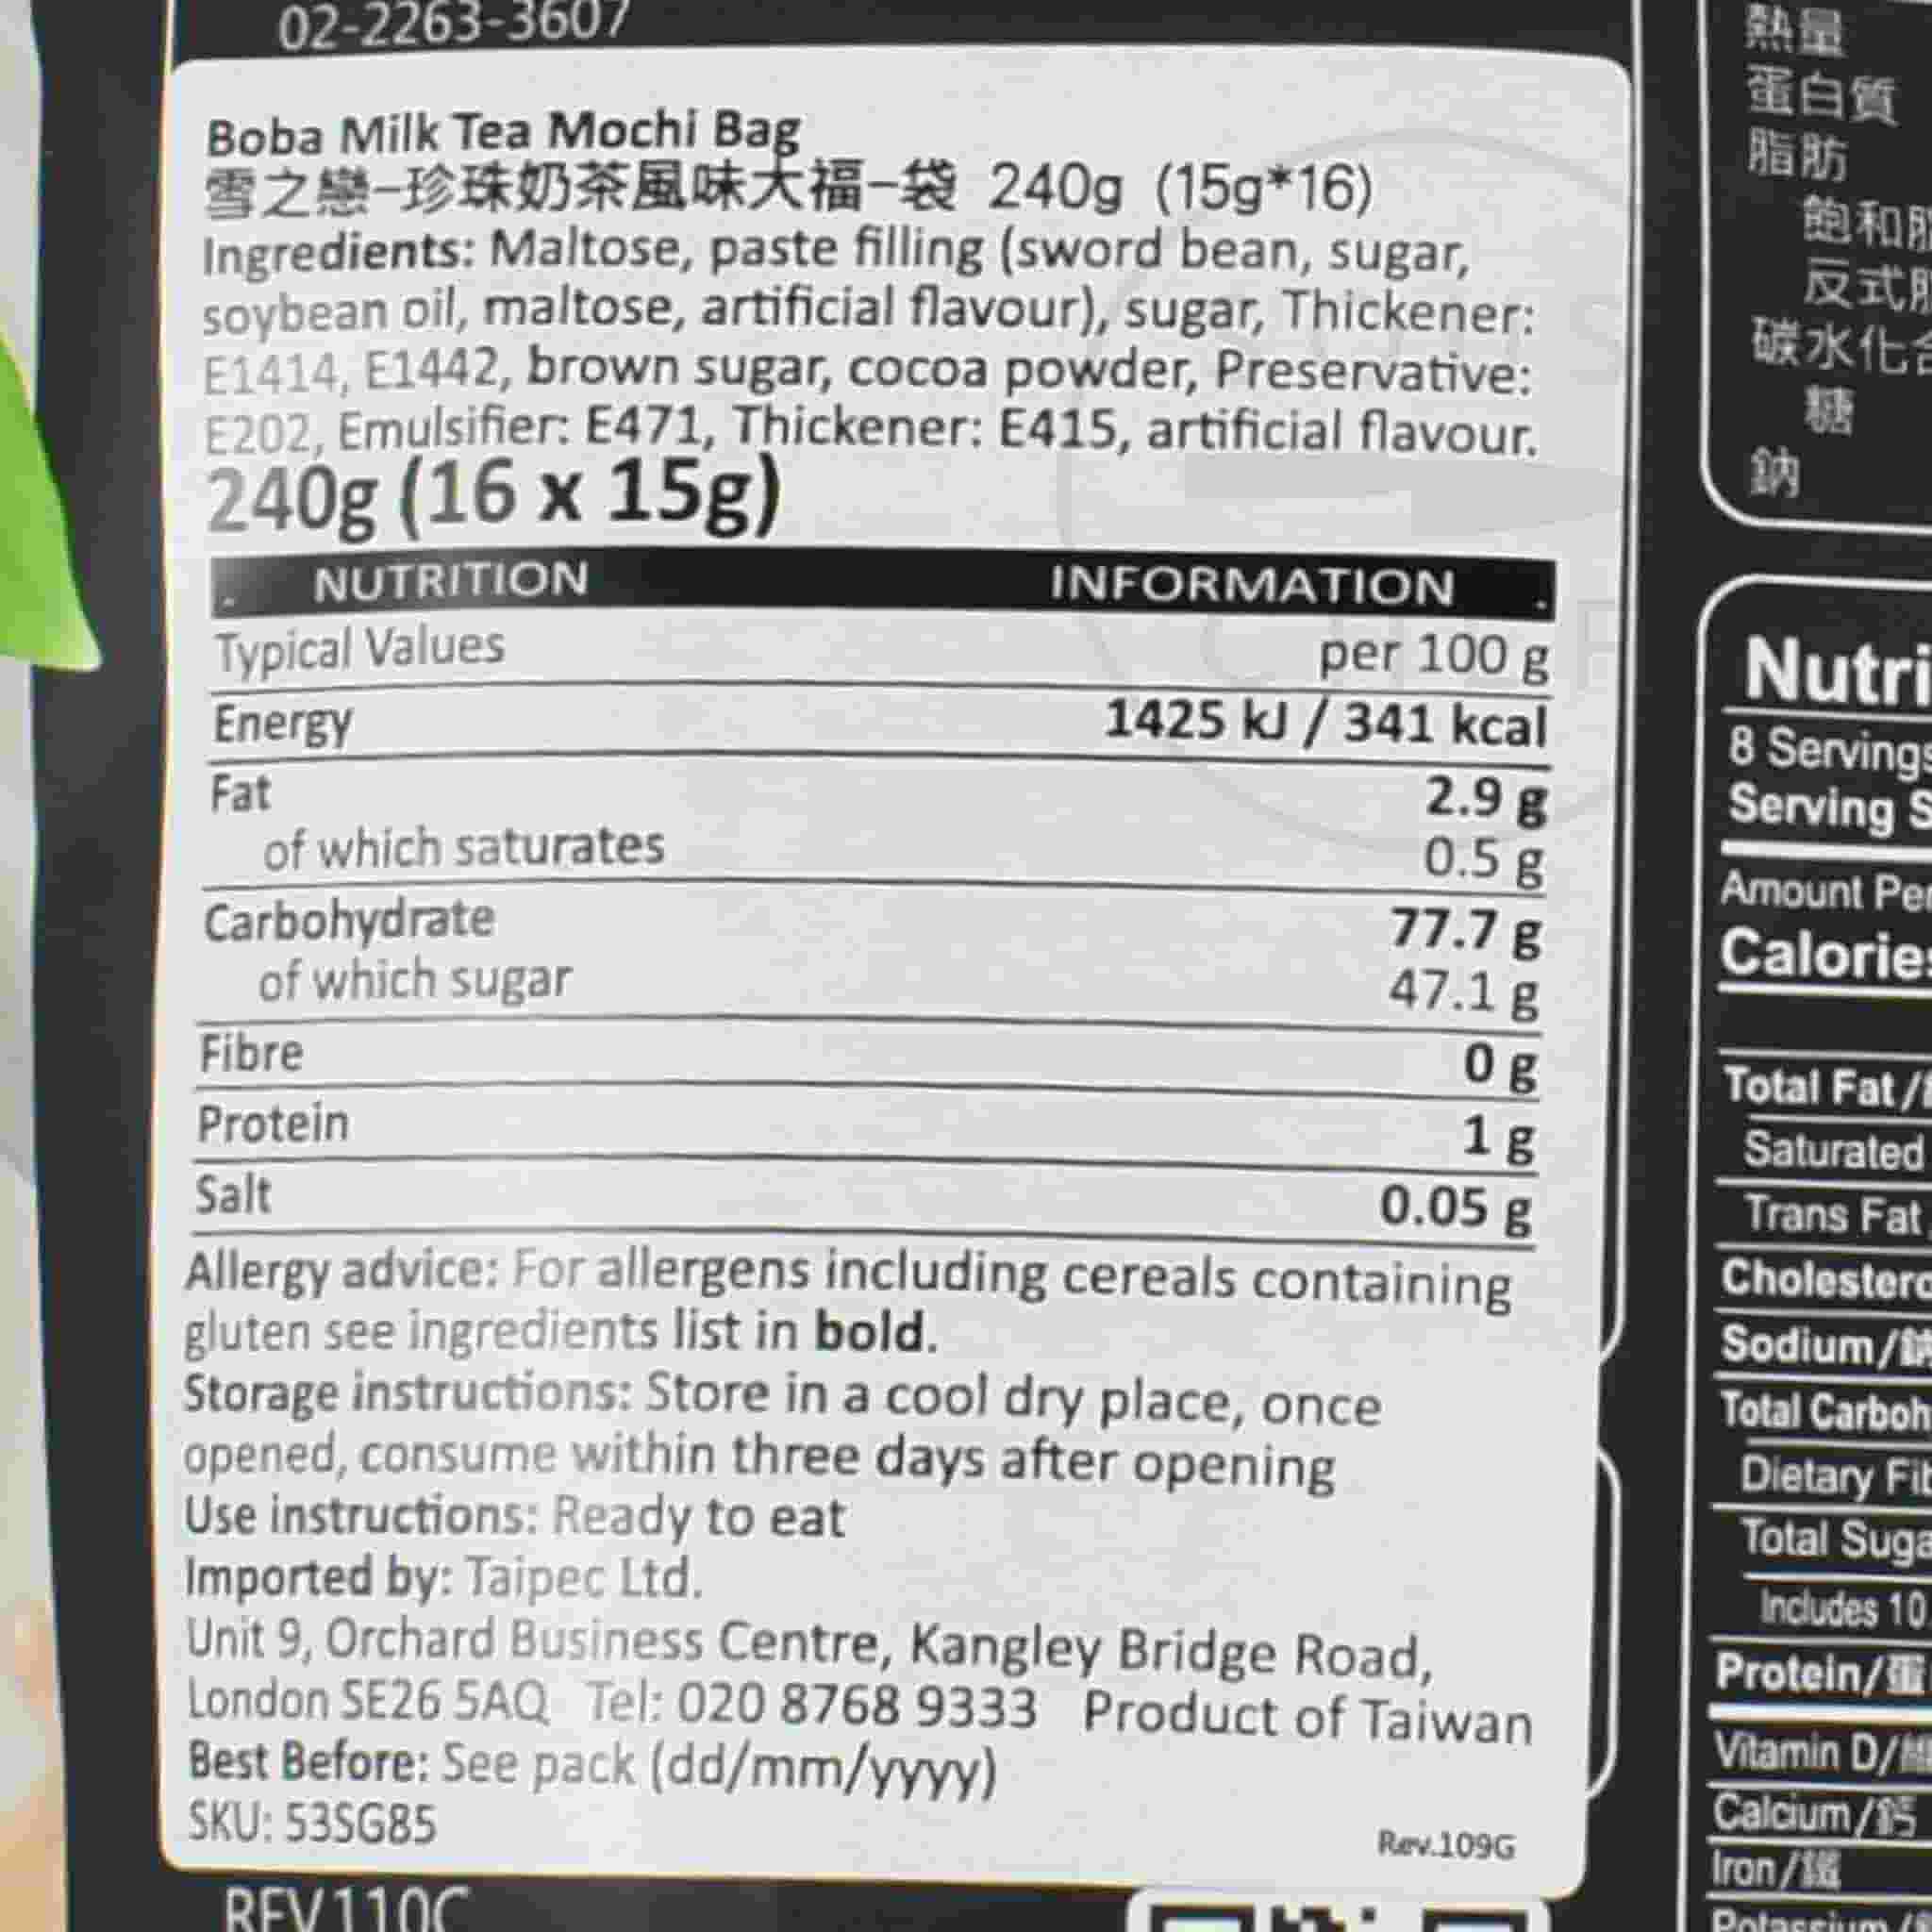 Boba Milk Tea Mochi 240g ingredients and nutrition